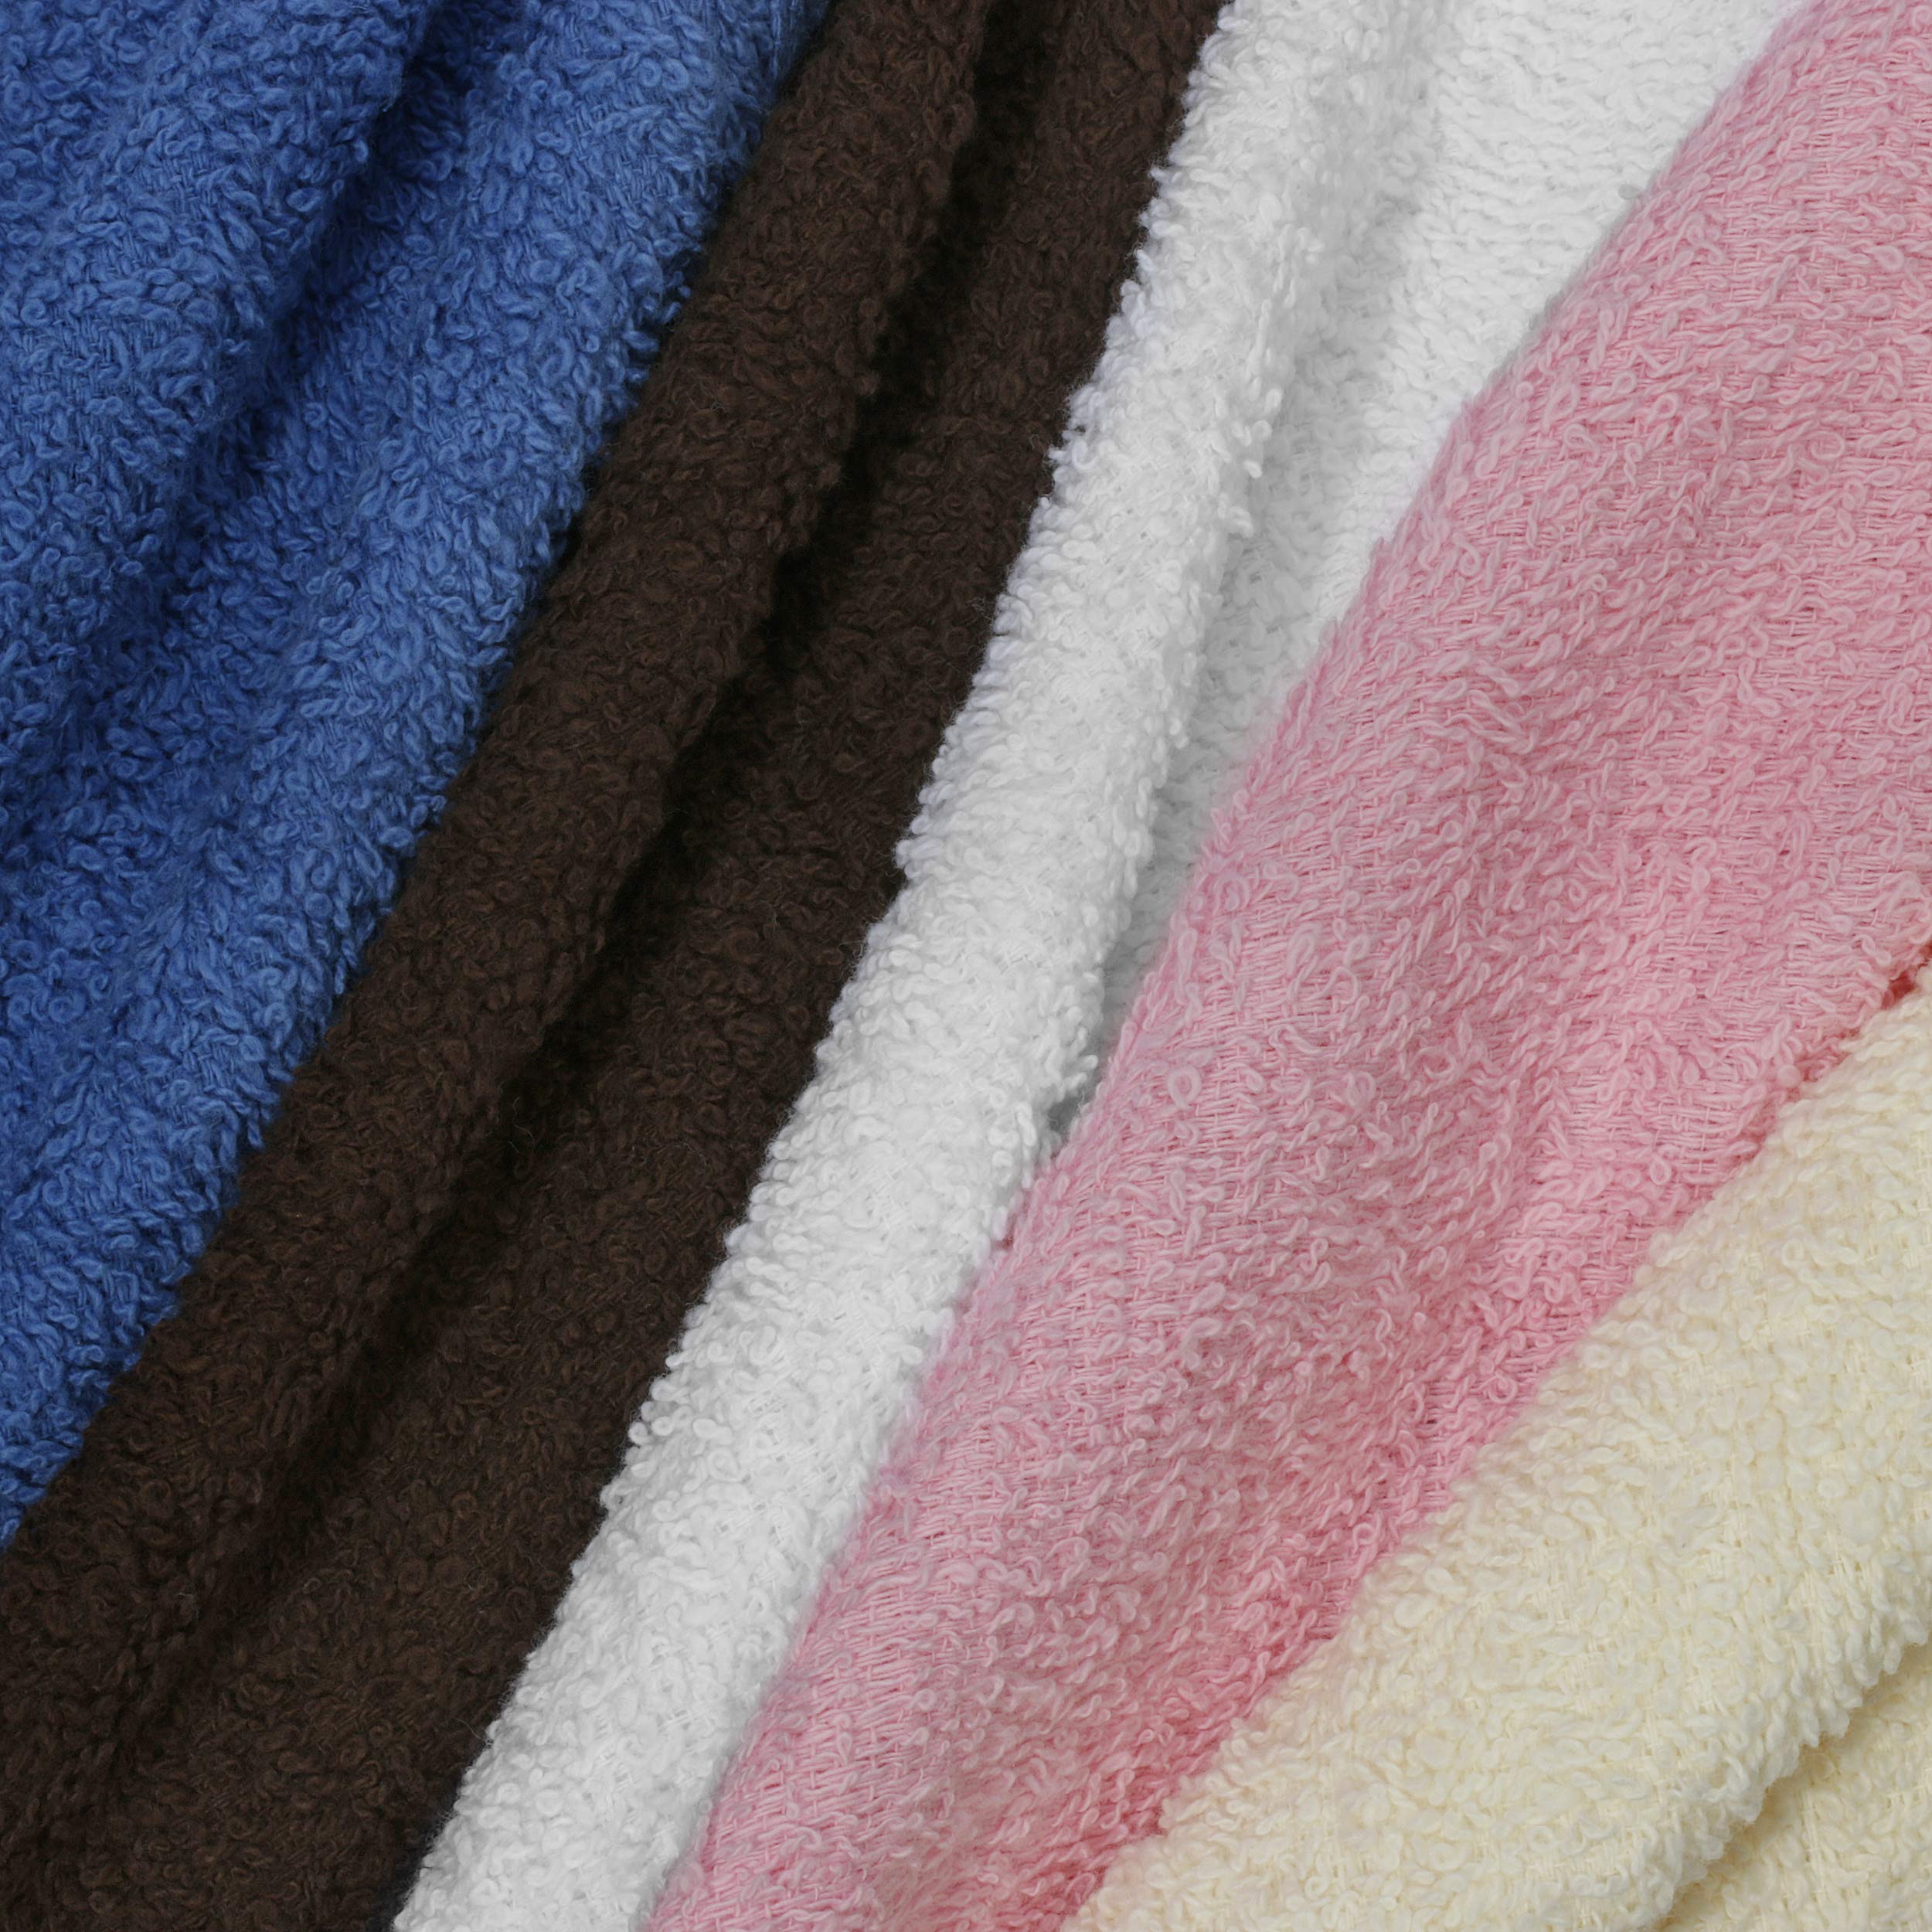 Simpli-Magic 79264C Cotton Washcloths, Size: 12”x12”, Multi Color, (Pack of 8, 400 Count Total)